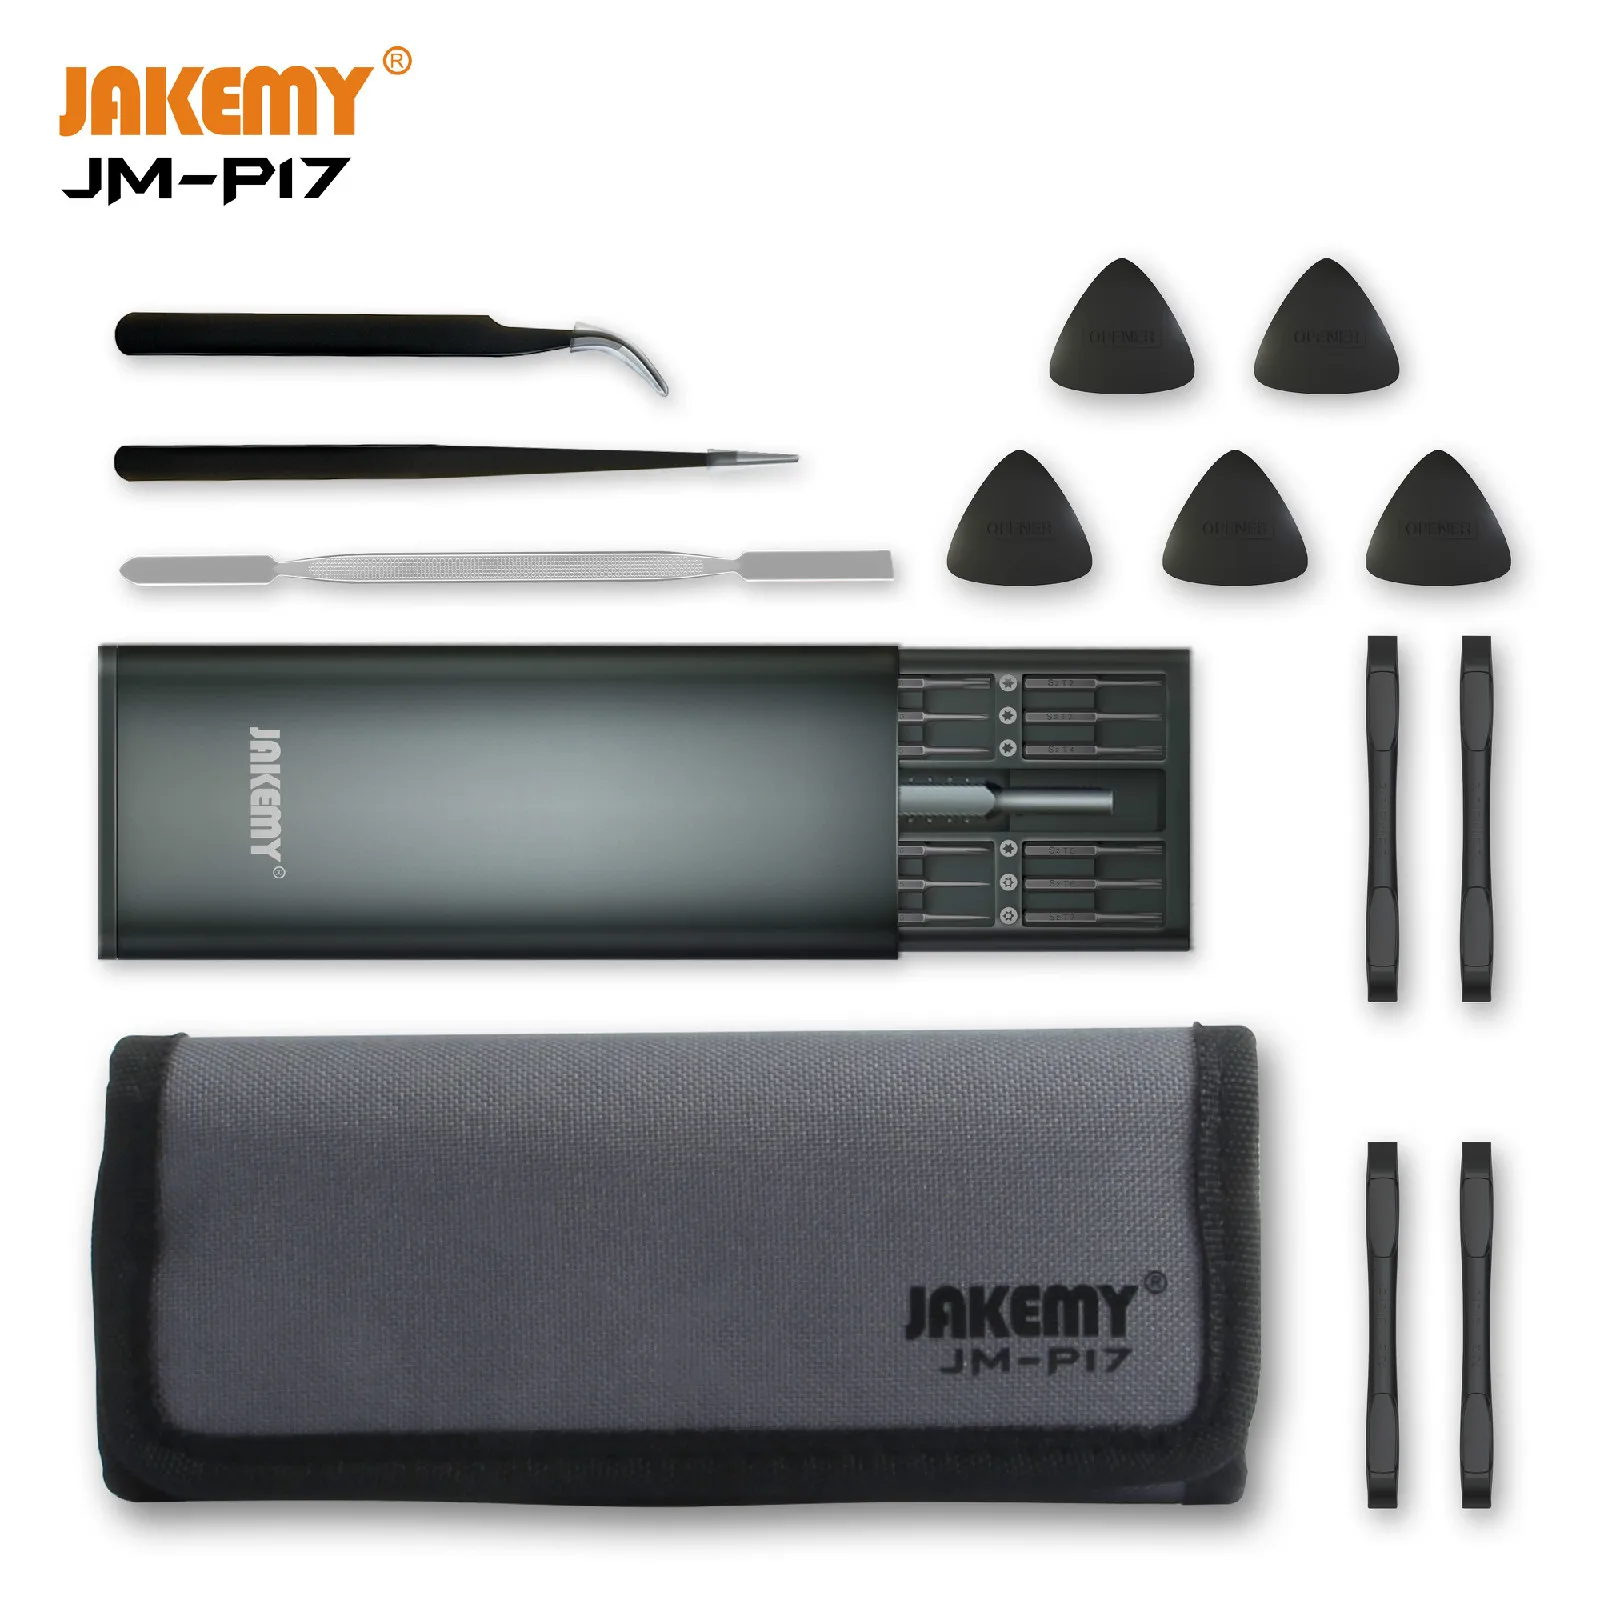 

JAKEMY JM-P17 Portable Mini Precision Screwdriver Tool Set with Oxford Bag for Mobile Phone Computer Eyeglass Home DIY Repair